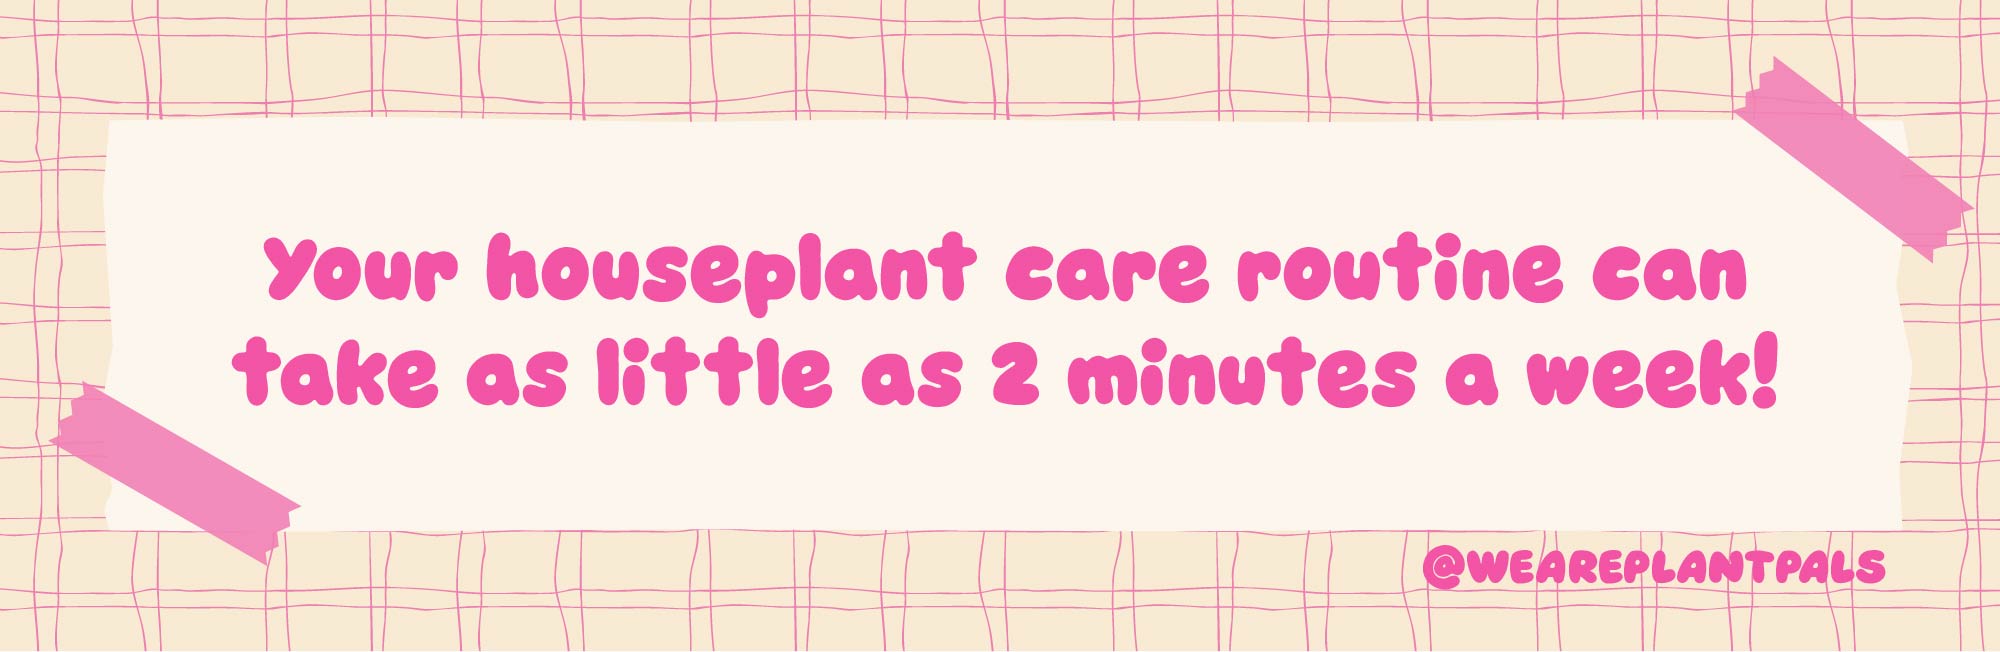 houseplant care routine